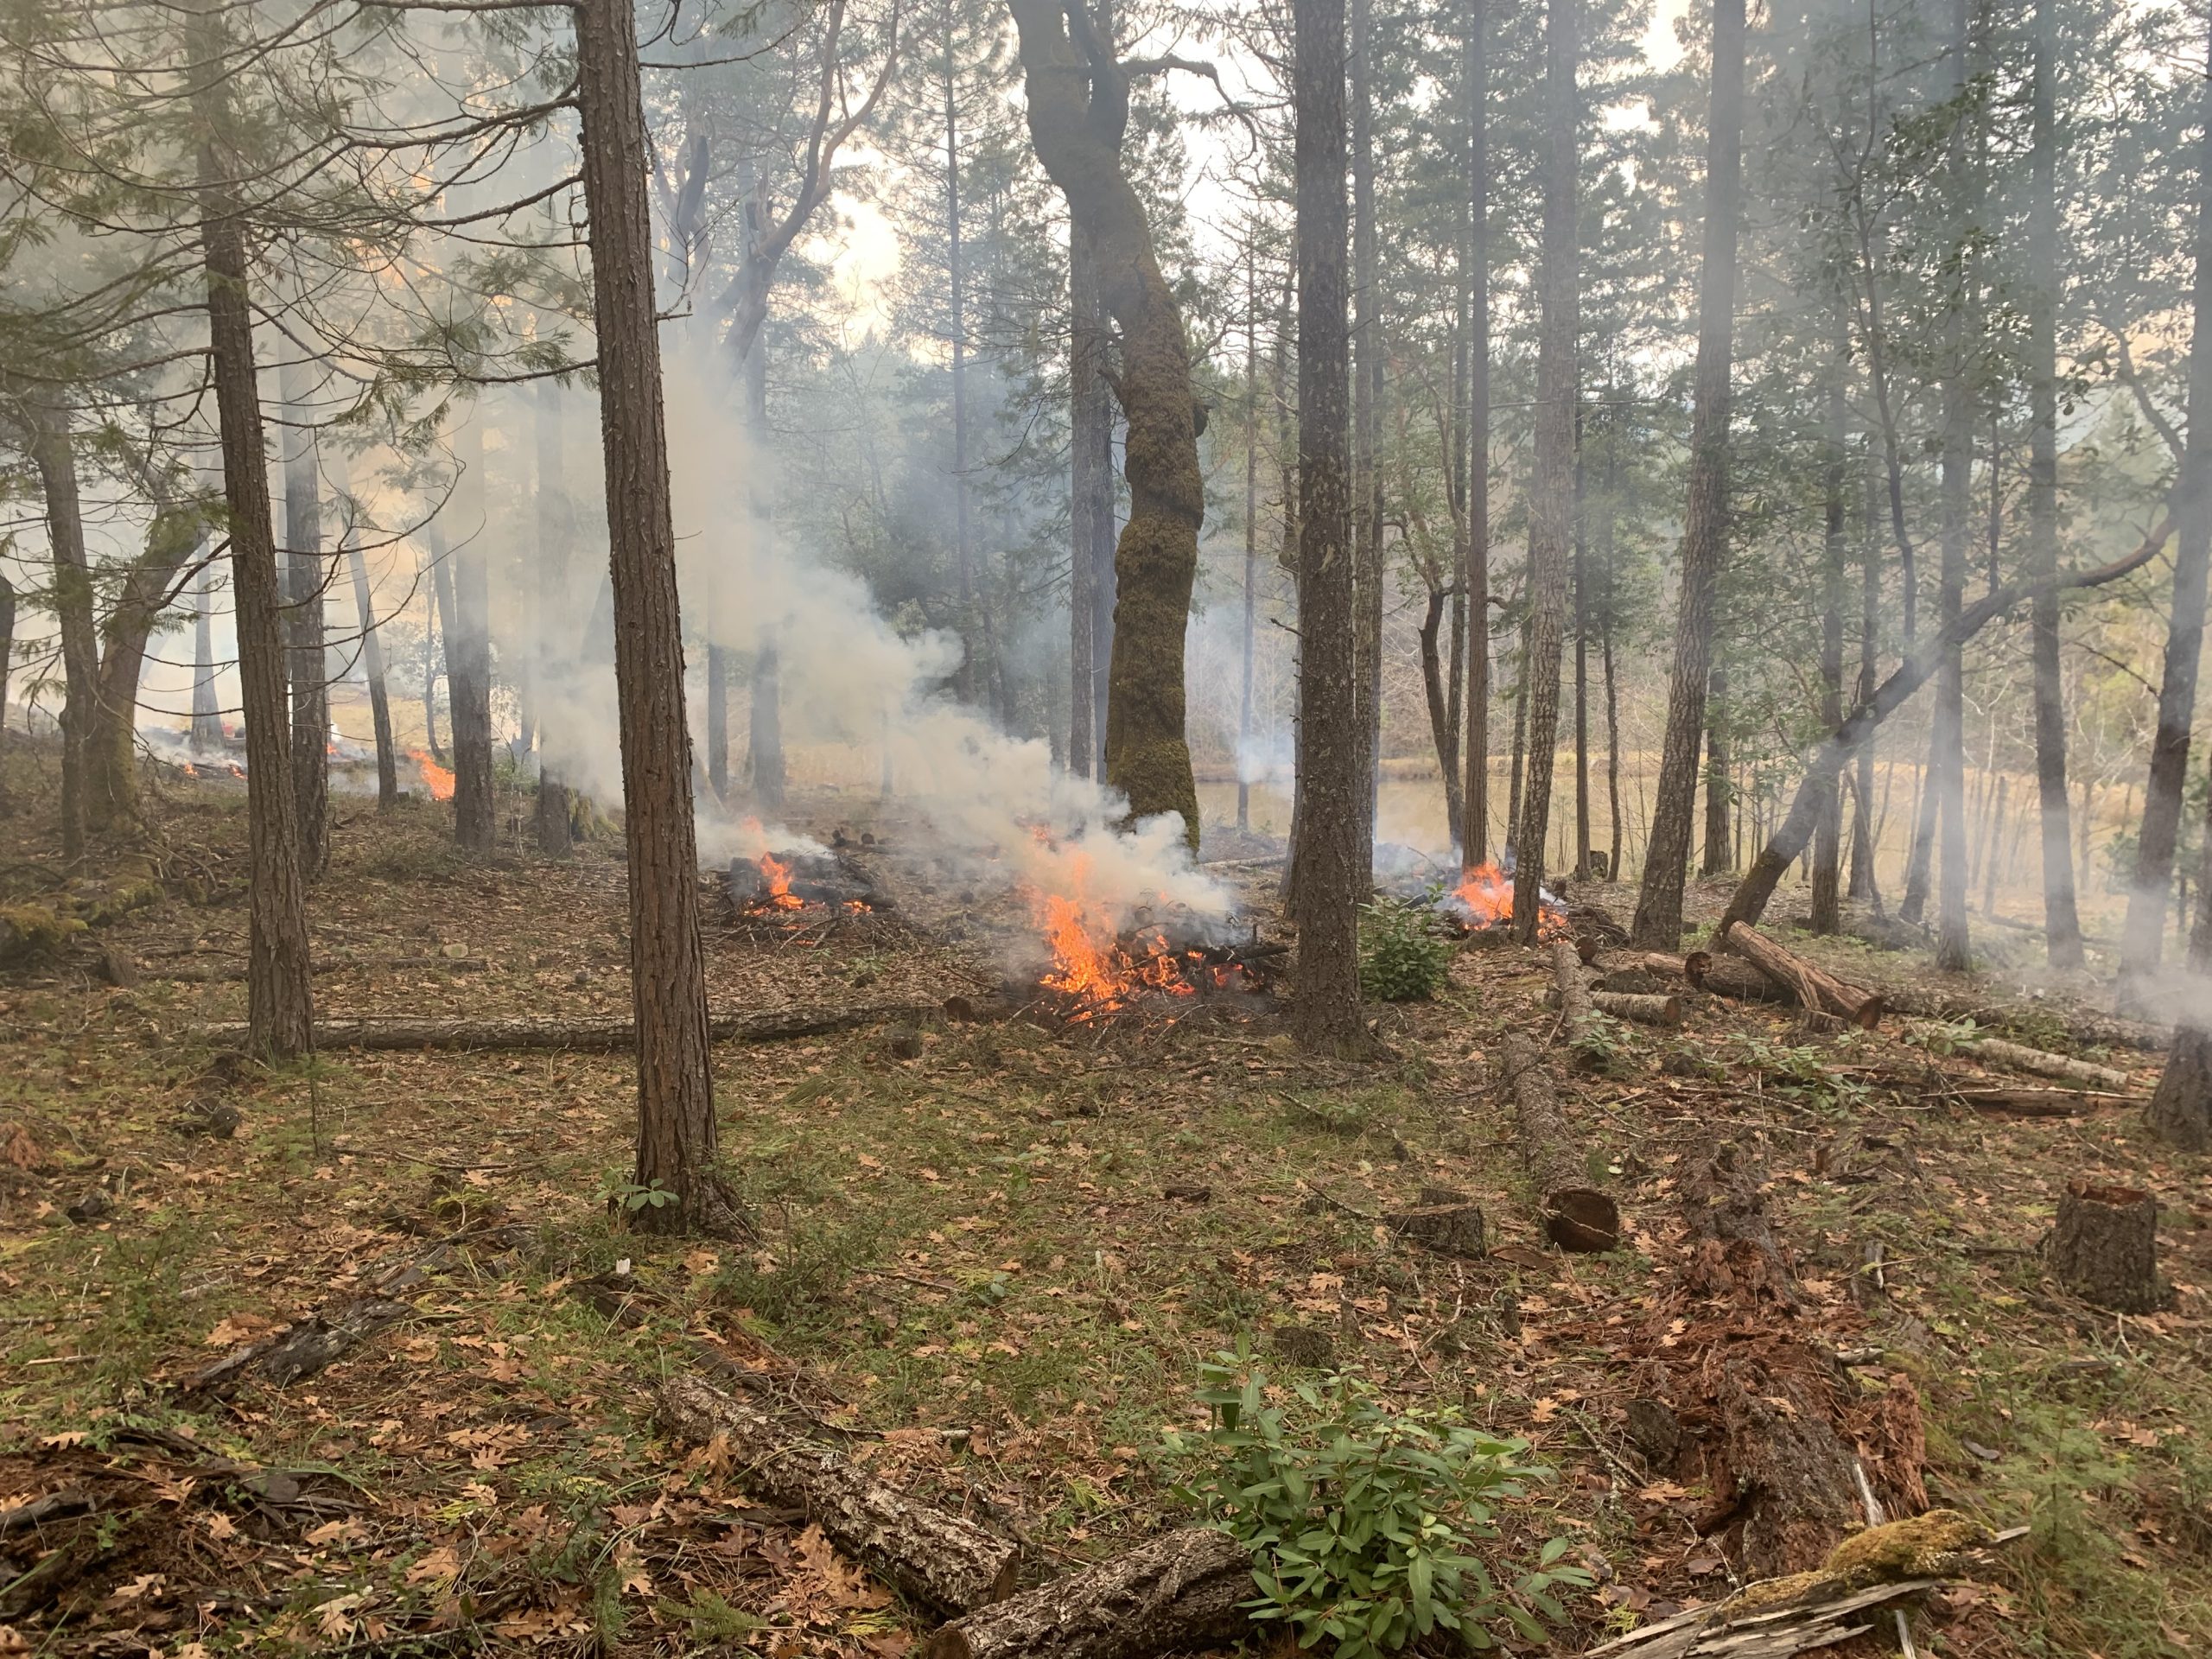 Prescribed pile burning to eliminate the slash near Williams, Oregon.